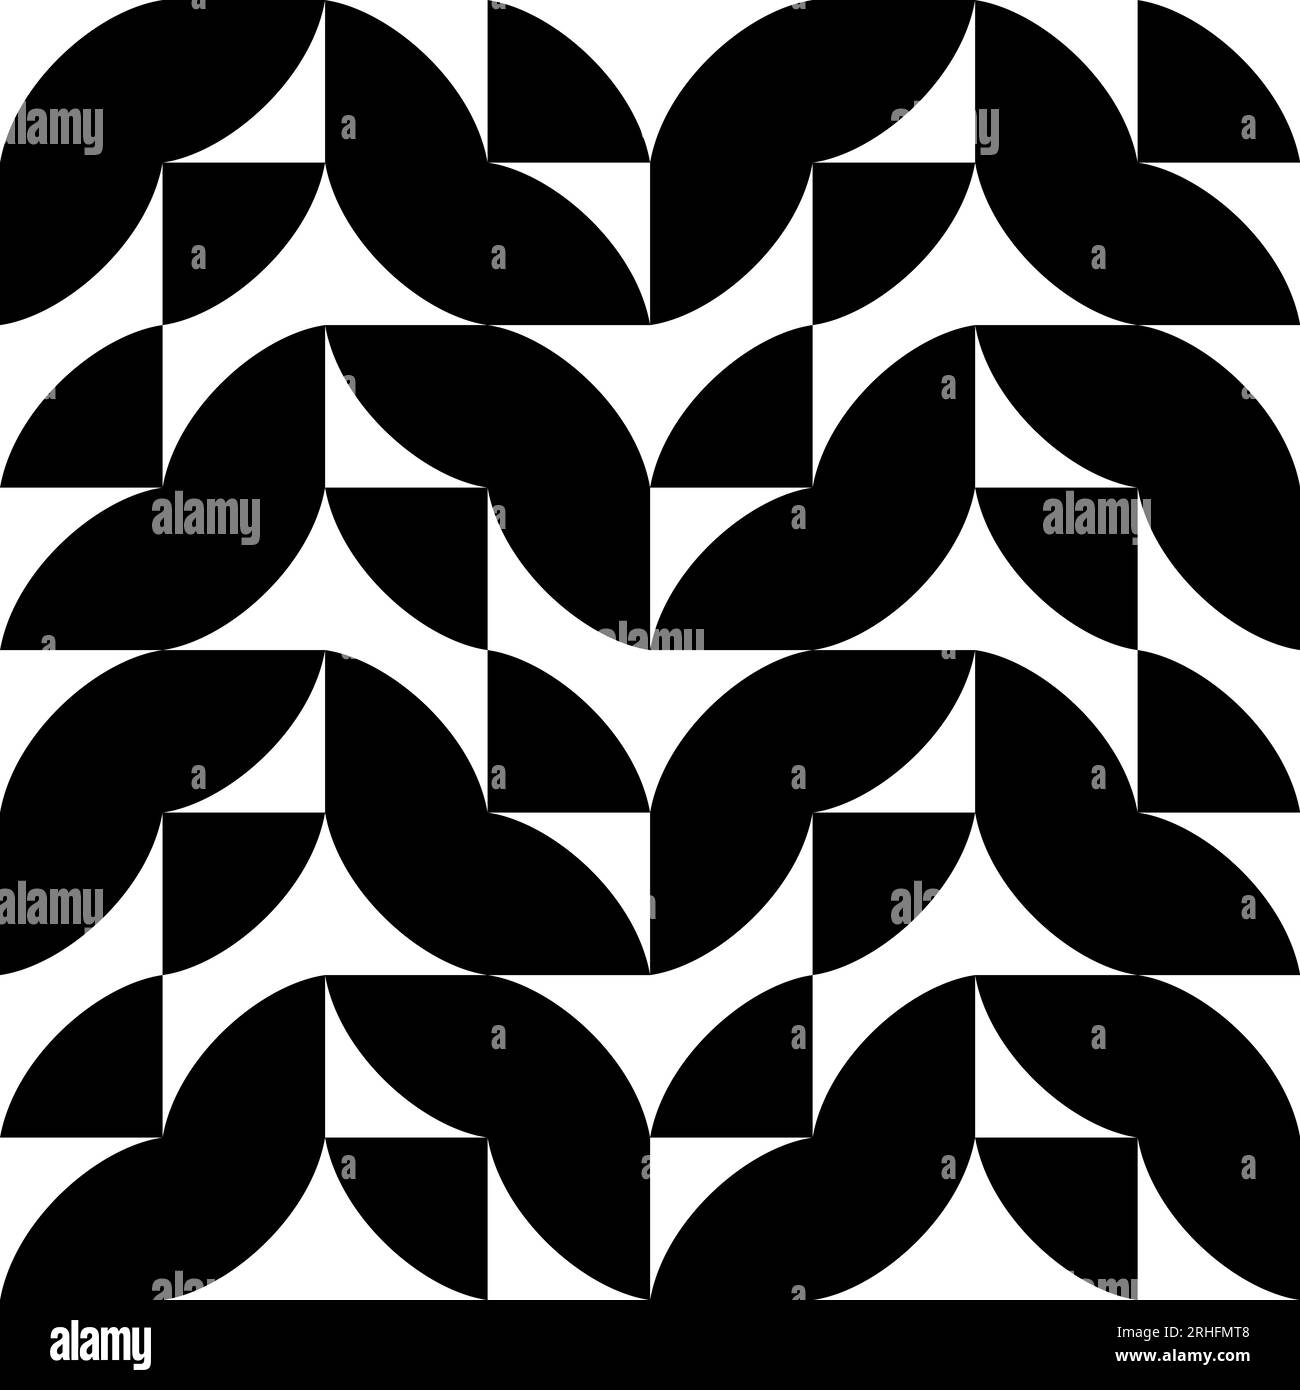 Black Outline Basic Shapes Stock Illustrations – 1,275 Black